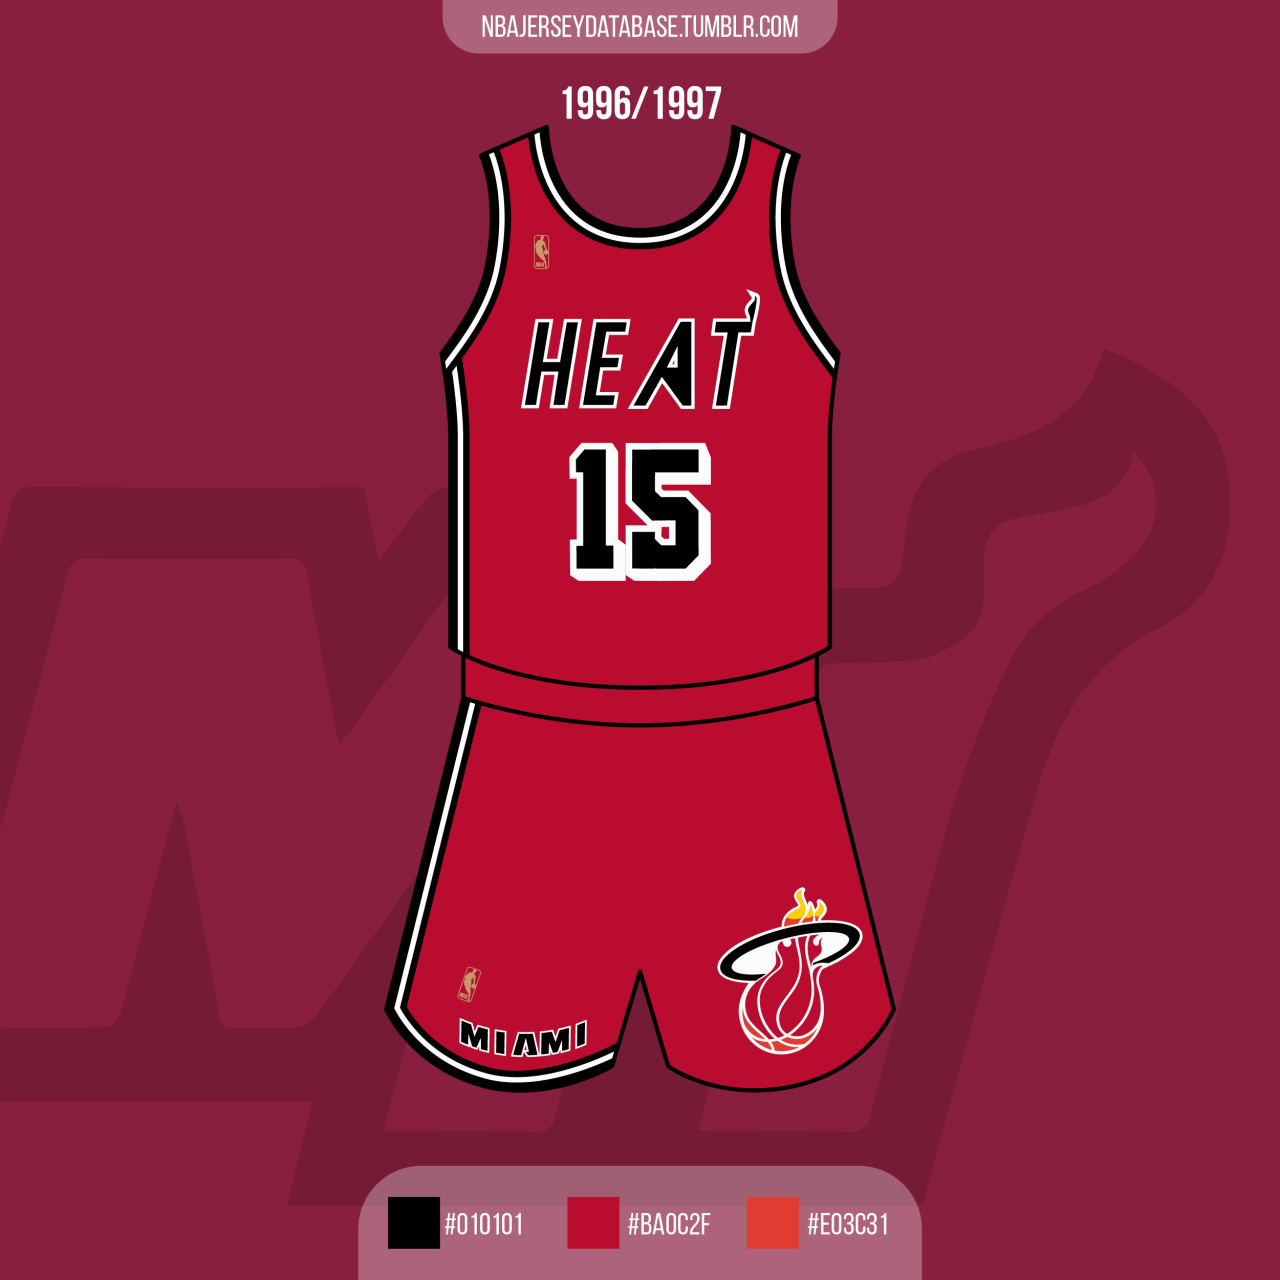 Miami Heat Alternate Uniform